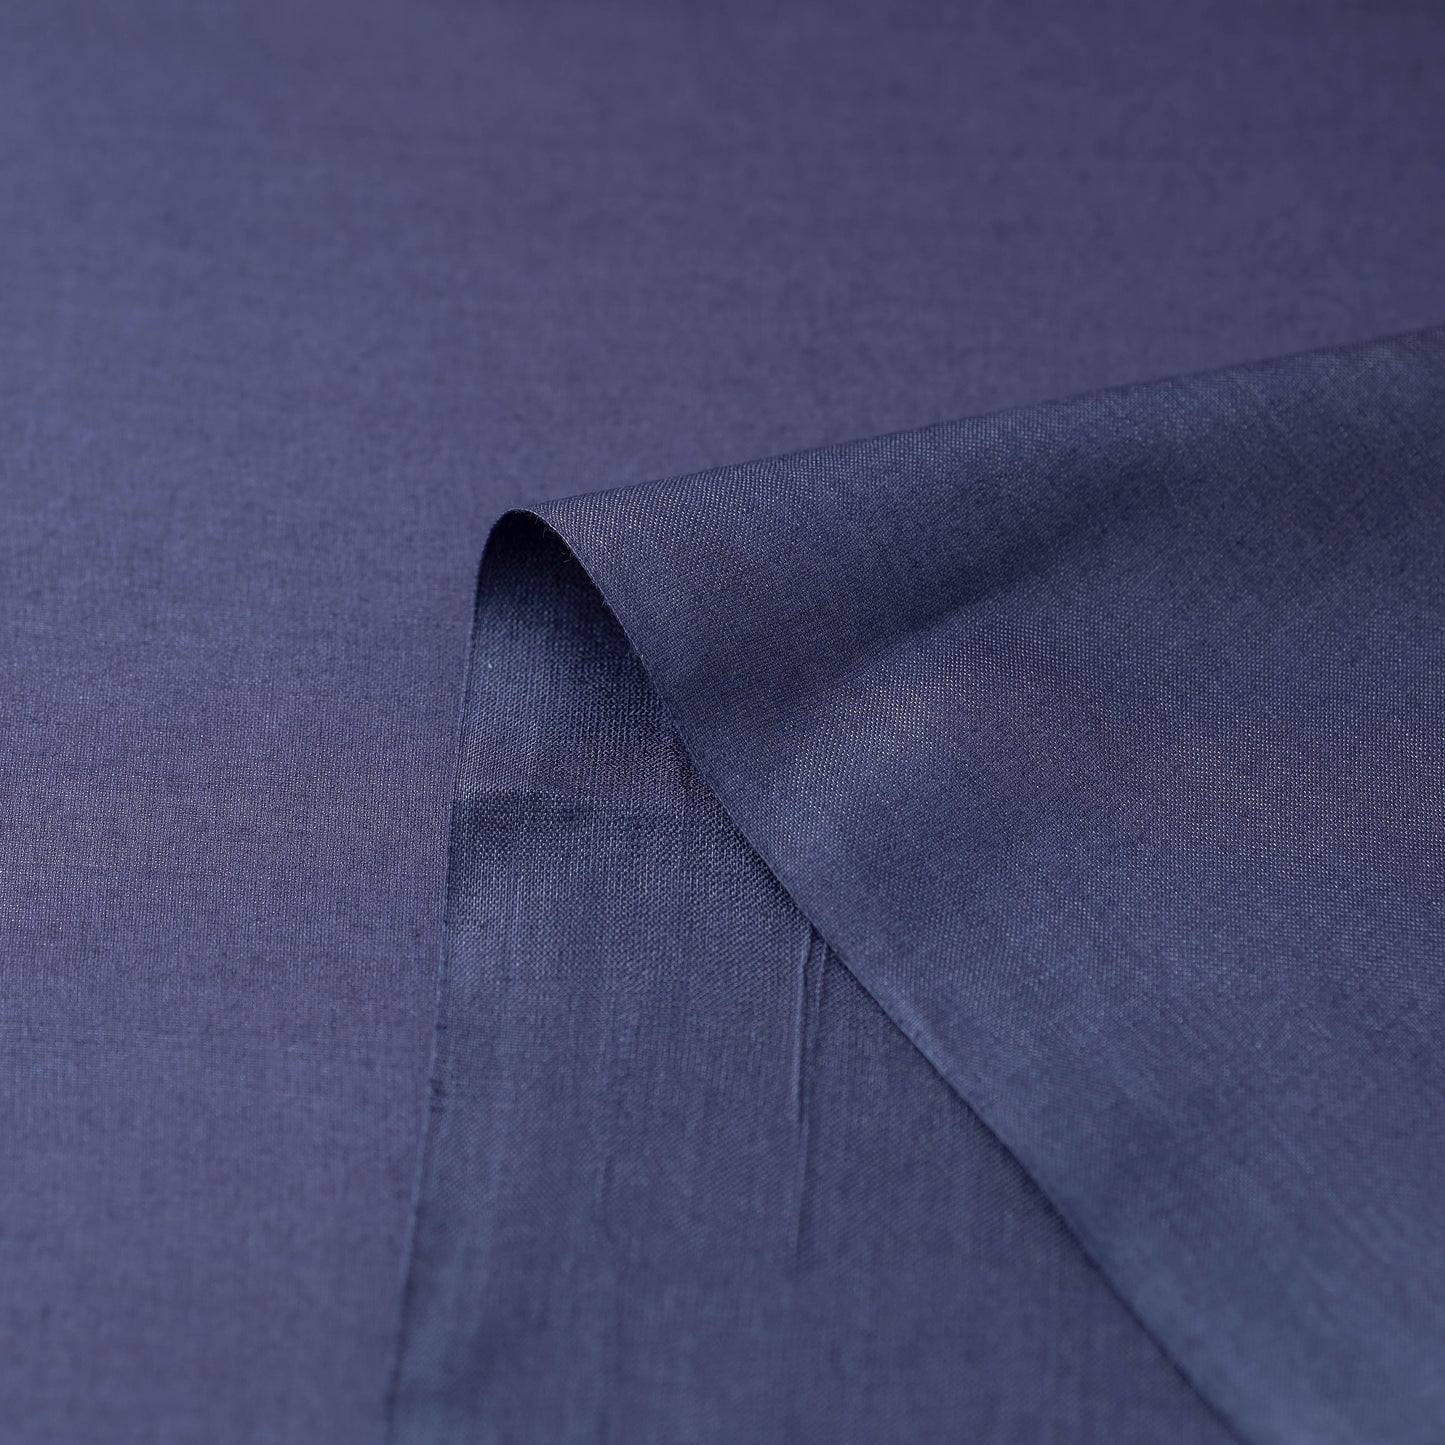 Purple - Vidarbha Tussar Silk Cotton Handloom Fabric